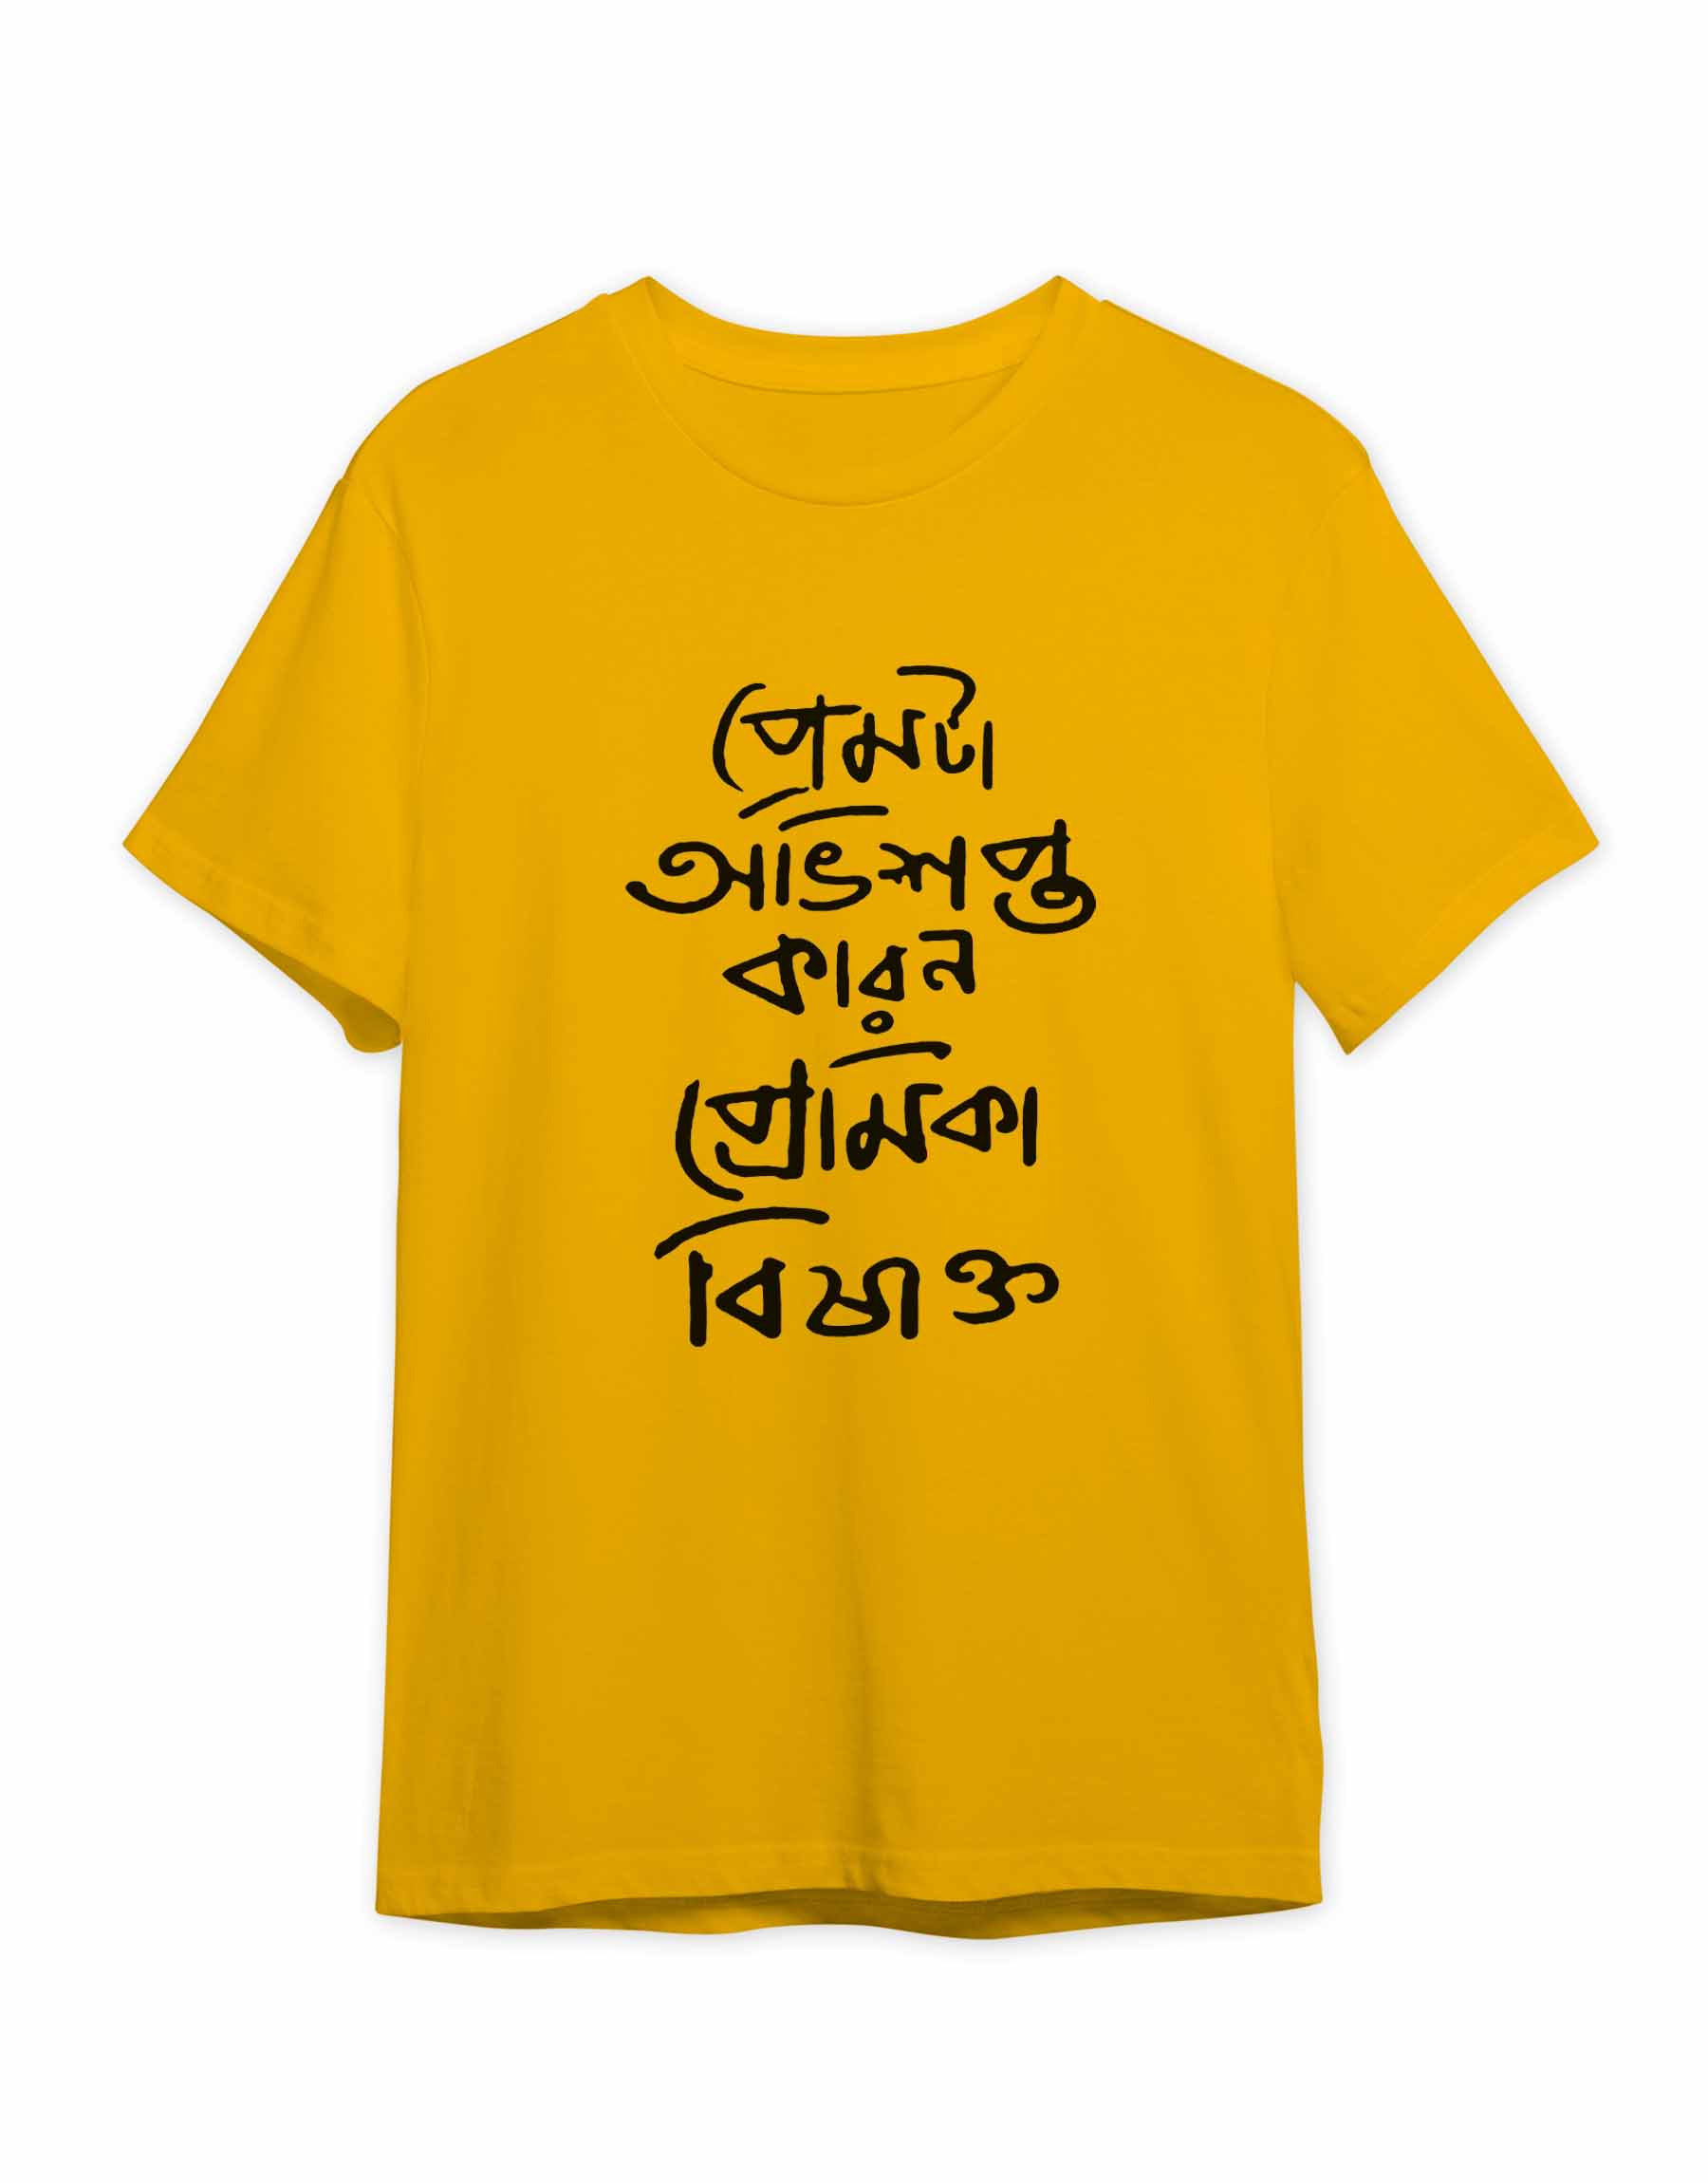 Prem Ta Abhisapto Bengali - Black T-Shirt - 499.00 - TEEGURUJI - Free Shipping